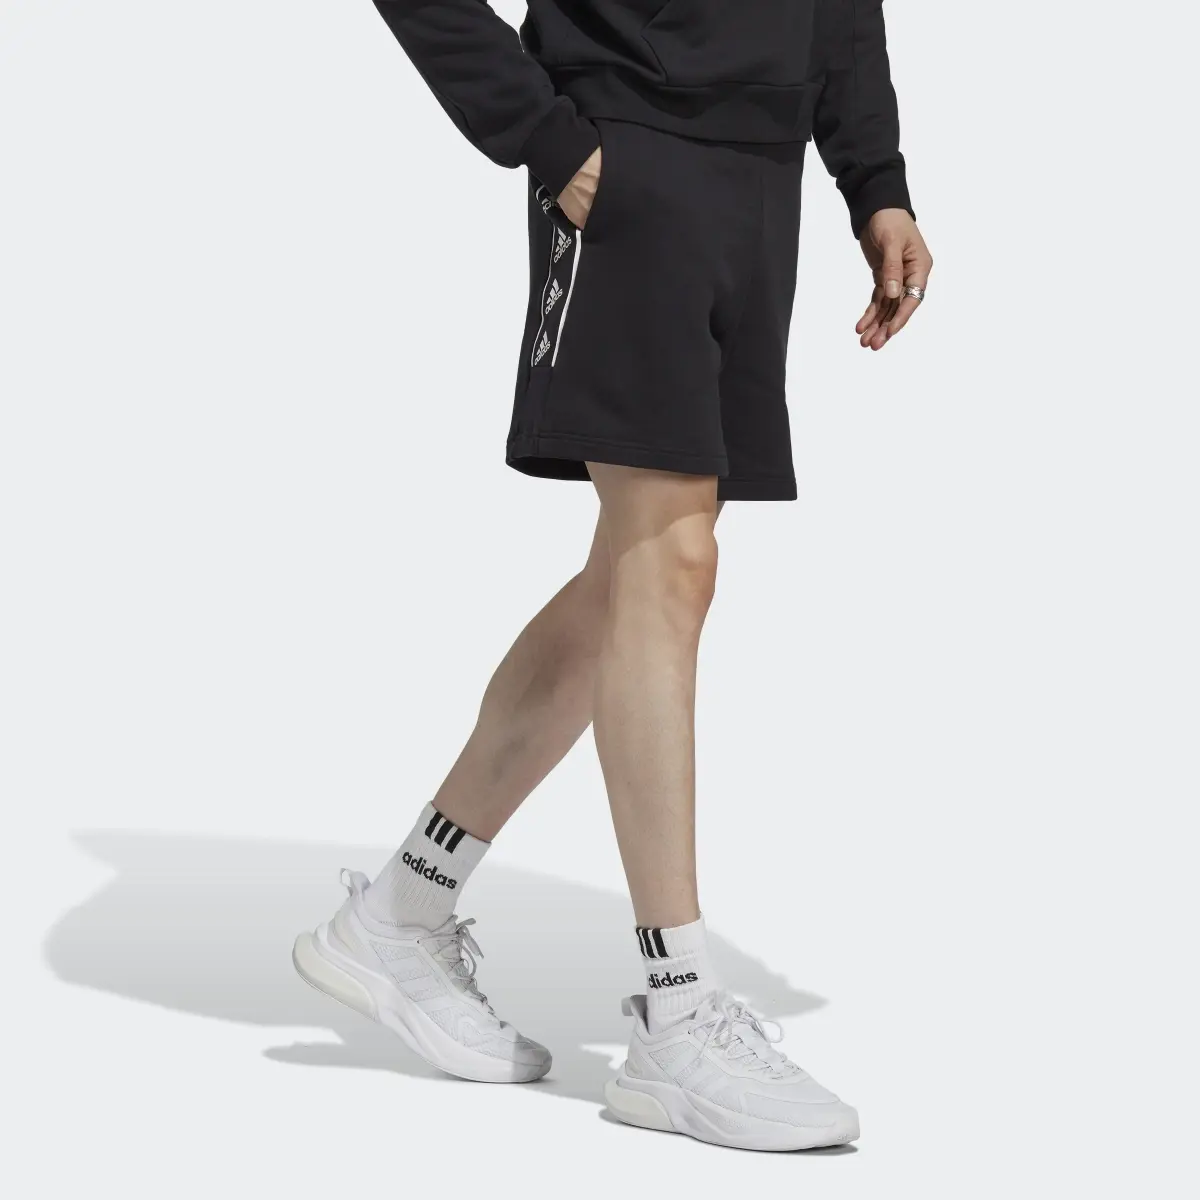 Adidas Brandlove Shorts. 3